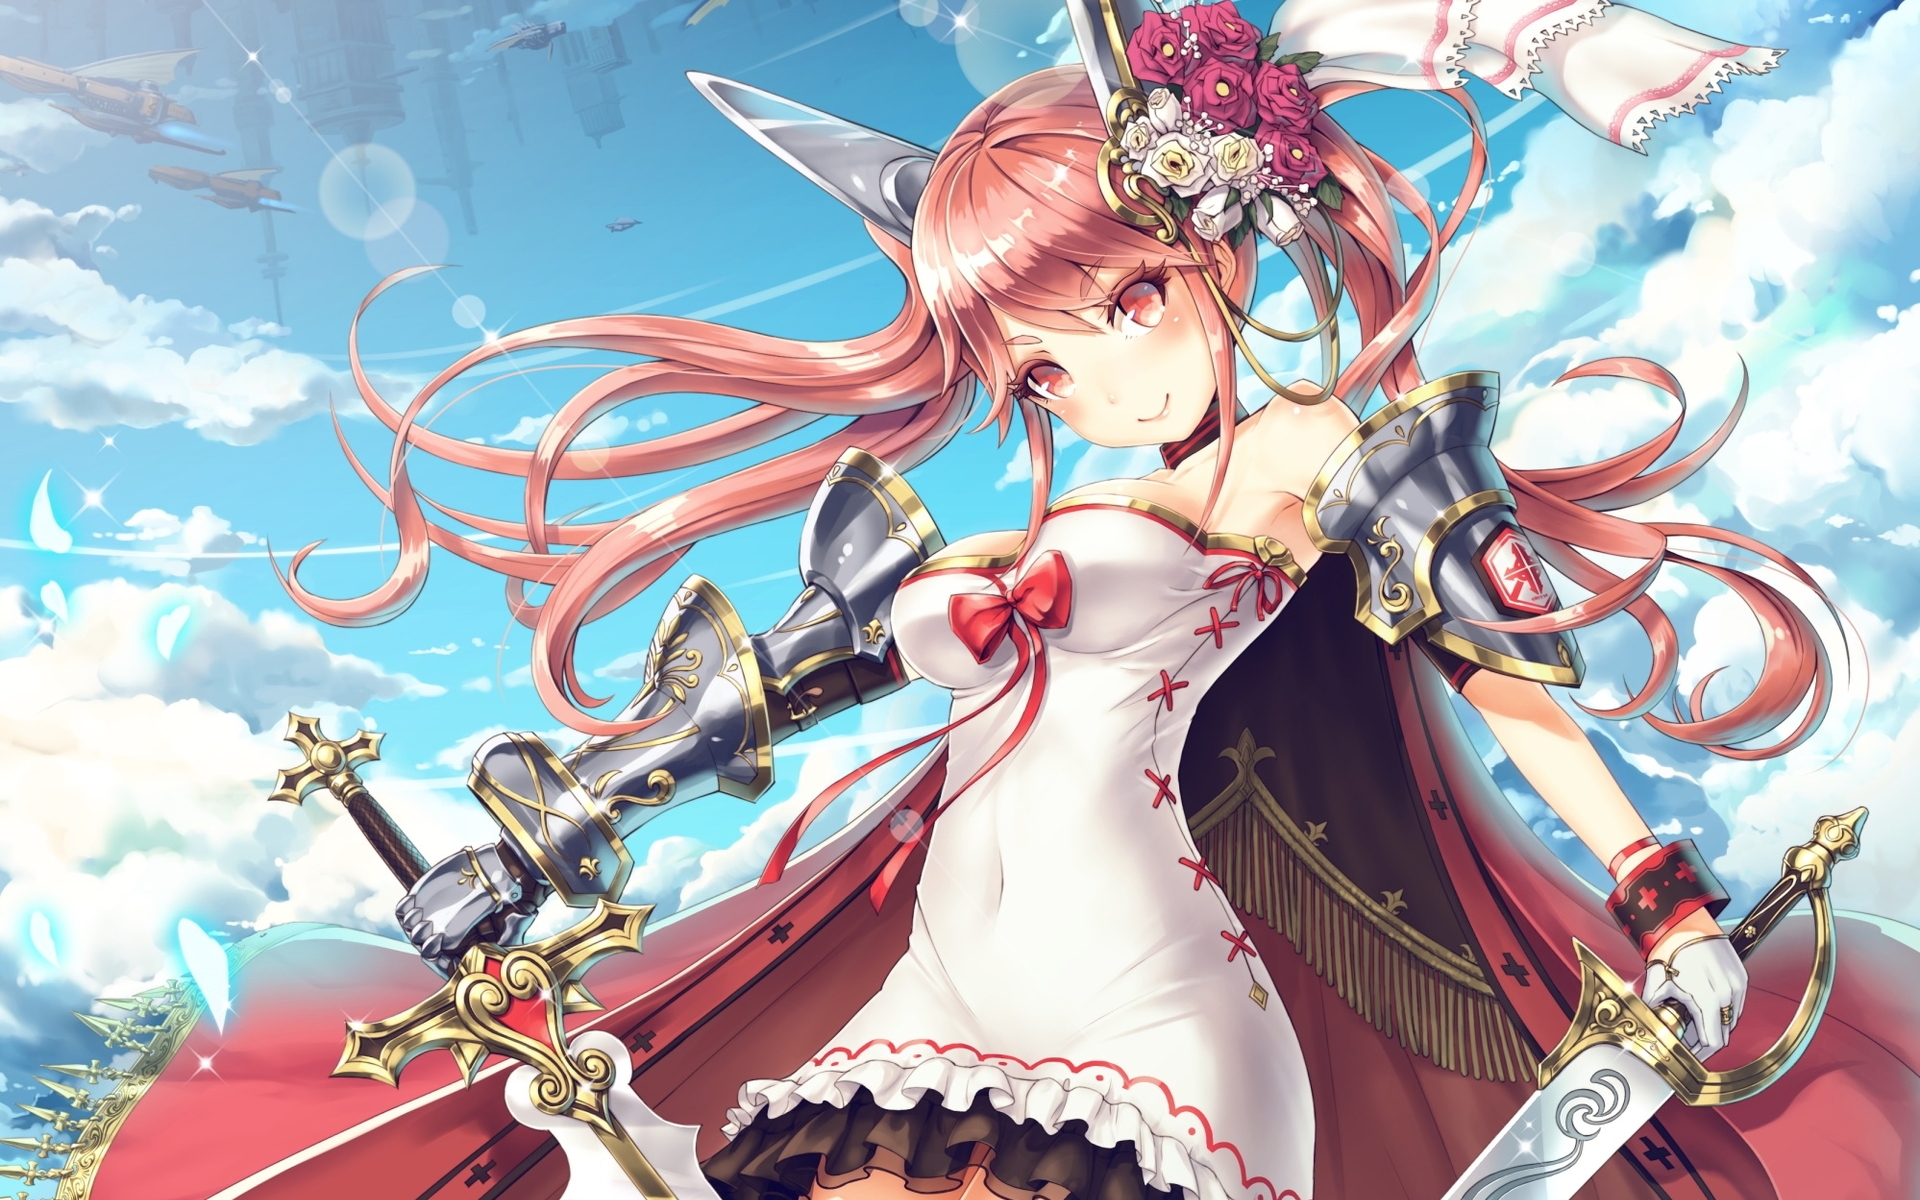 Image: Anime, girl, sword, weapon, long hair, flowers, ears